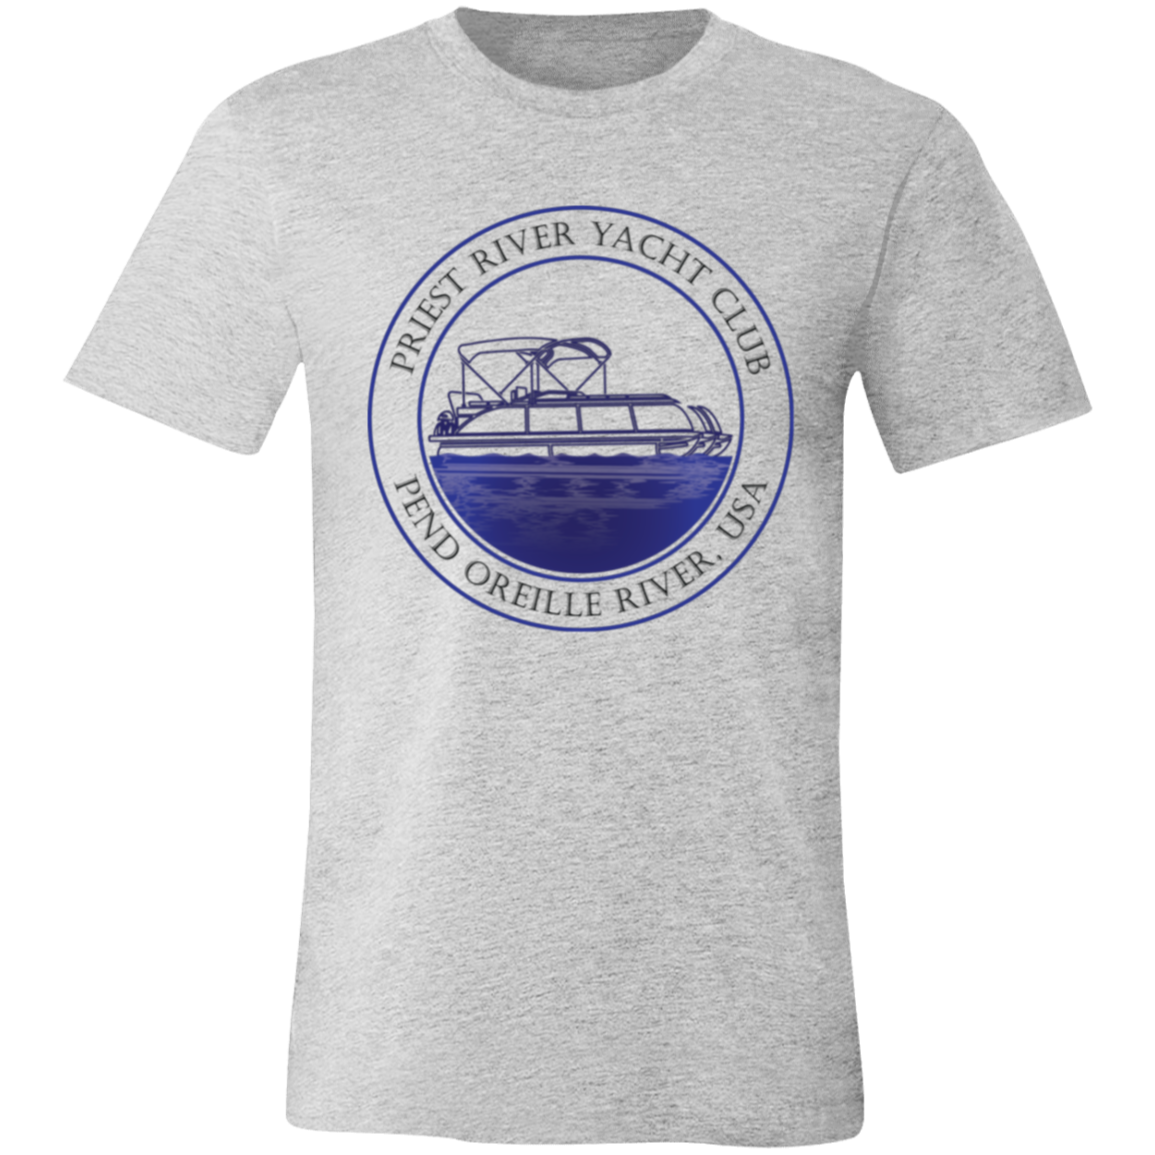 Priest River Yacht Club - Shirt